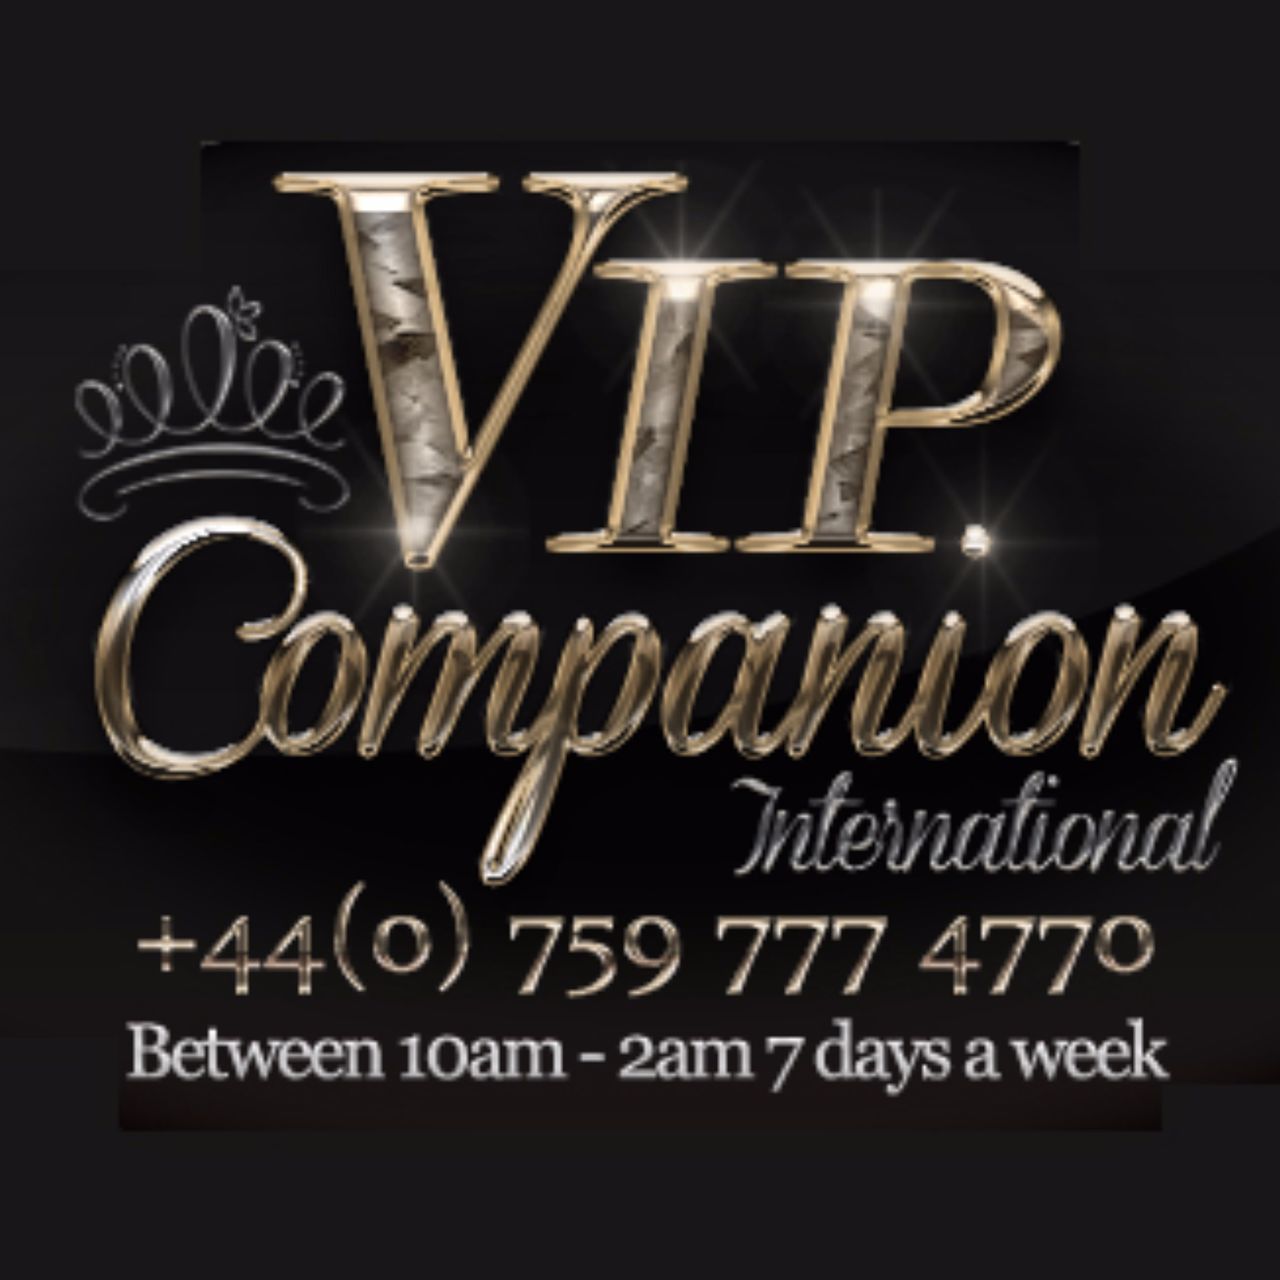 VIP Companion International